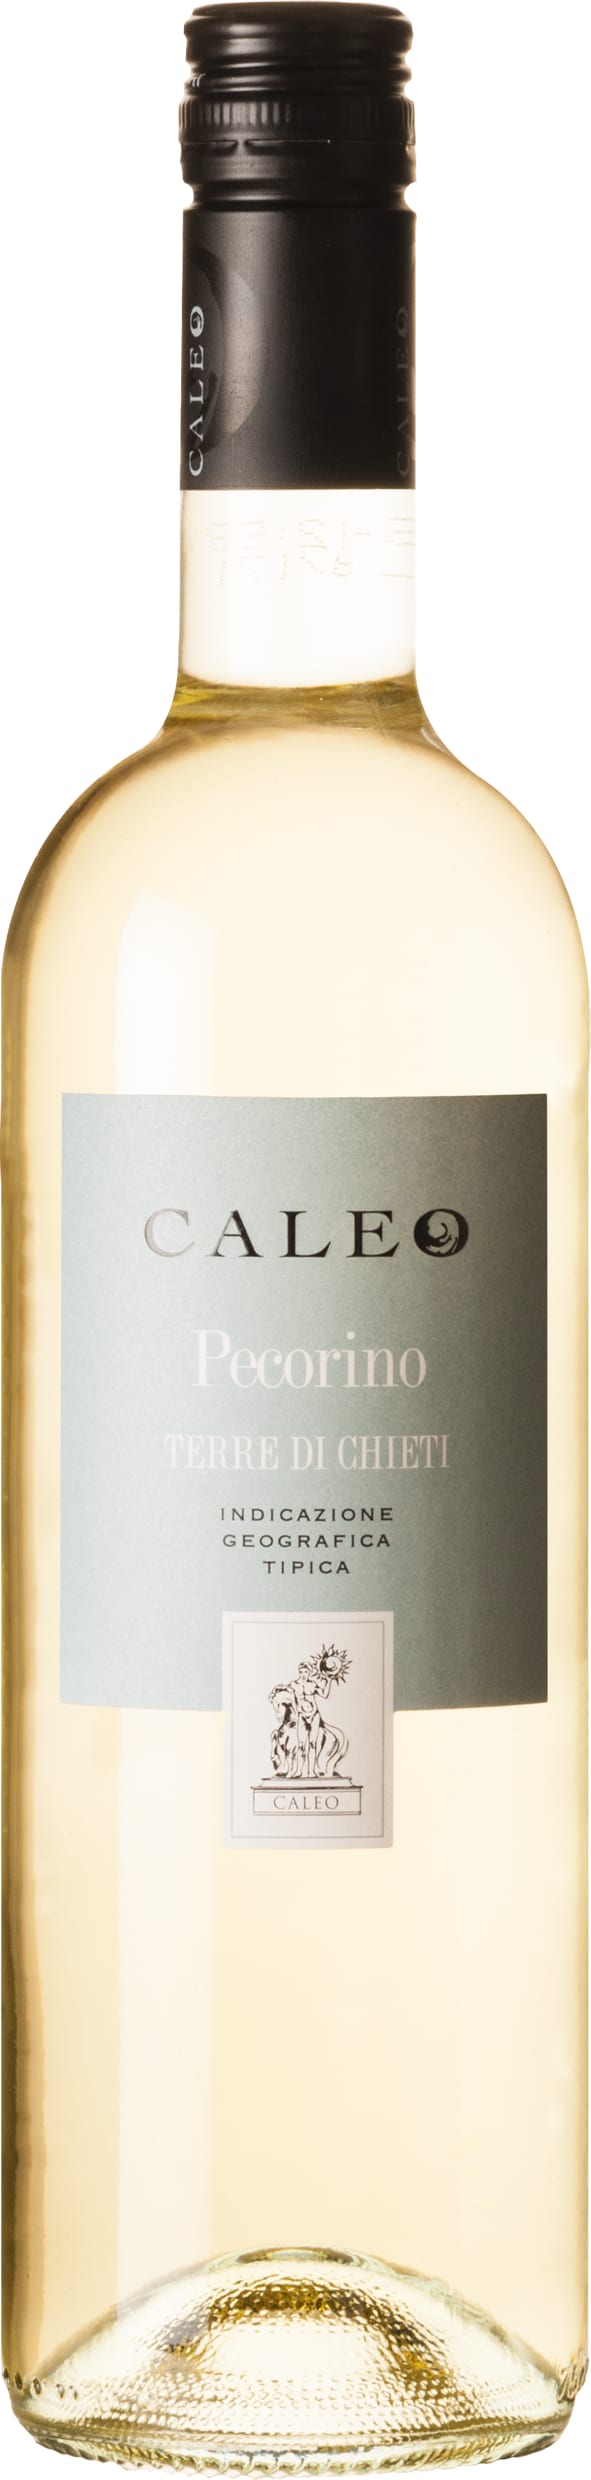 Caleo Pecorino, IGT Terre di Chieti Caleo 2023 75cl - Buy Caleo Wines from GREAT WINES DIRECT wine shop